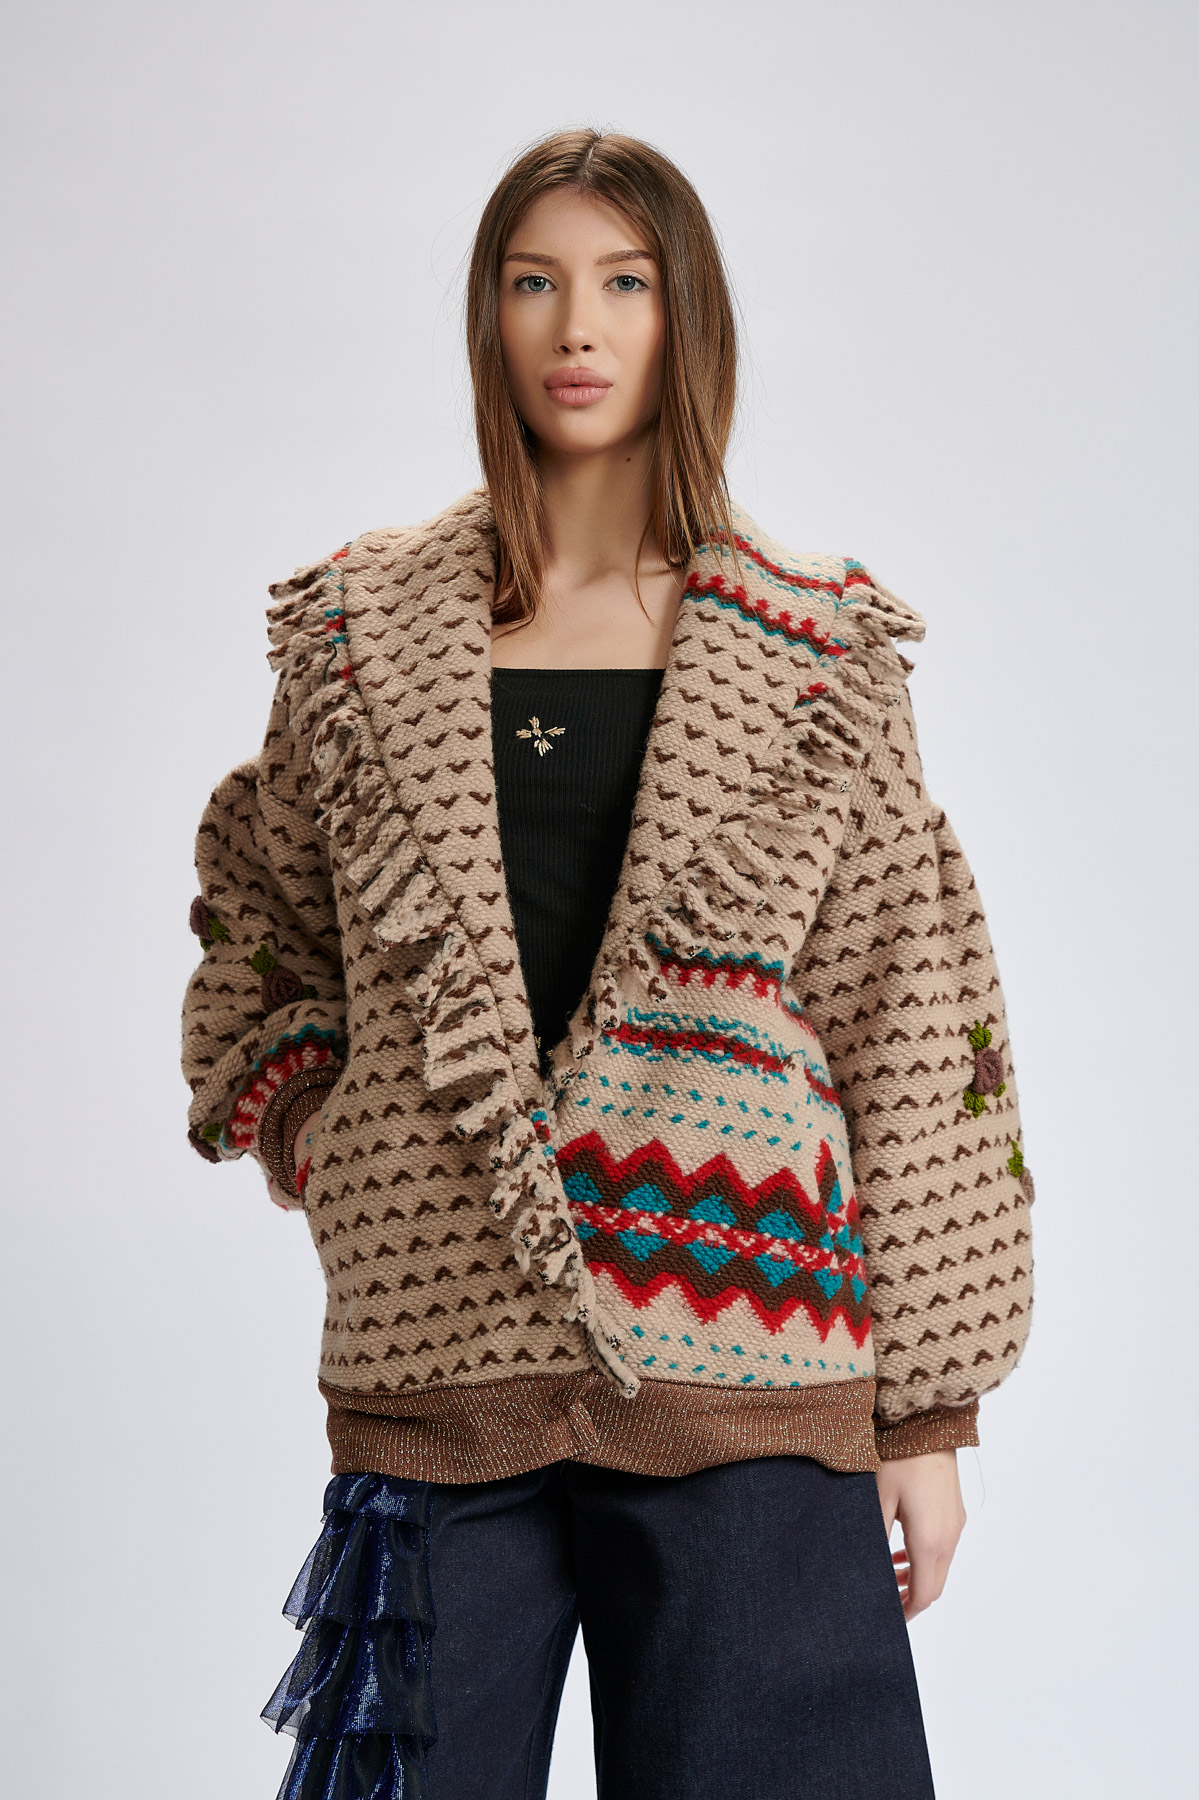 Jacket MADDO. Natural fabrics, original design, handmade embroidery